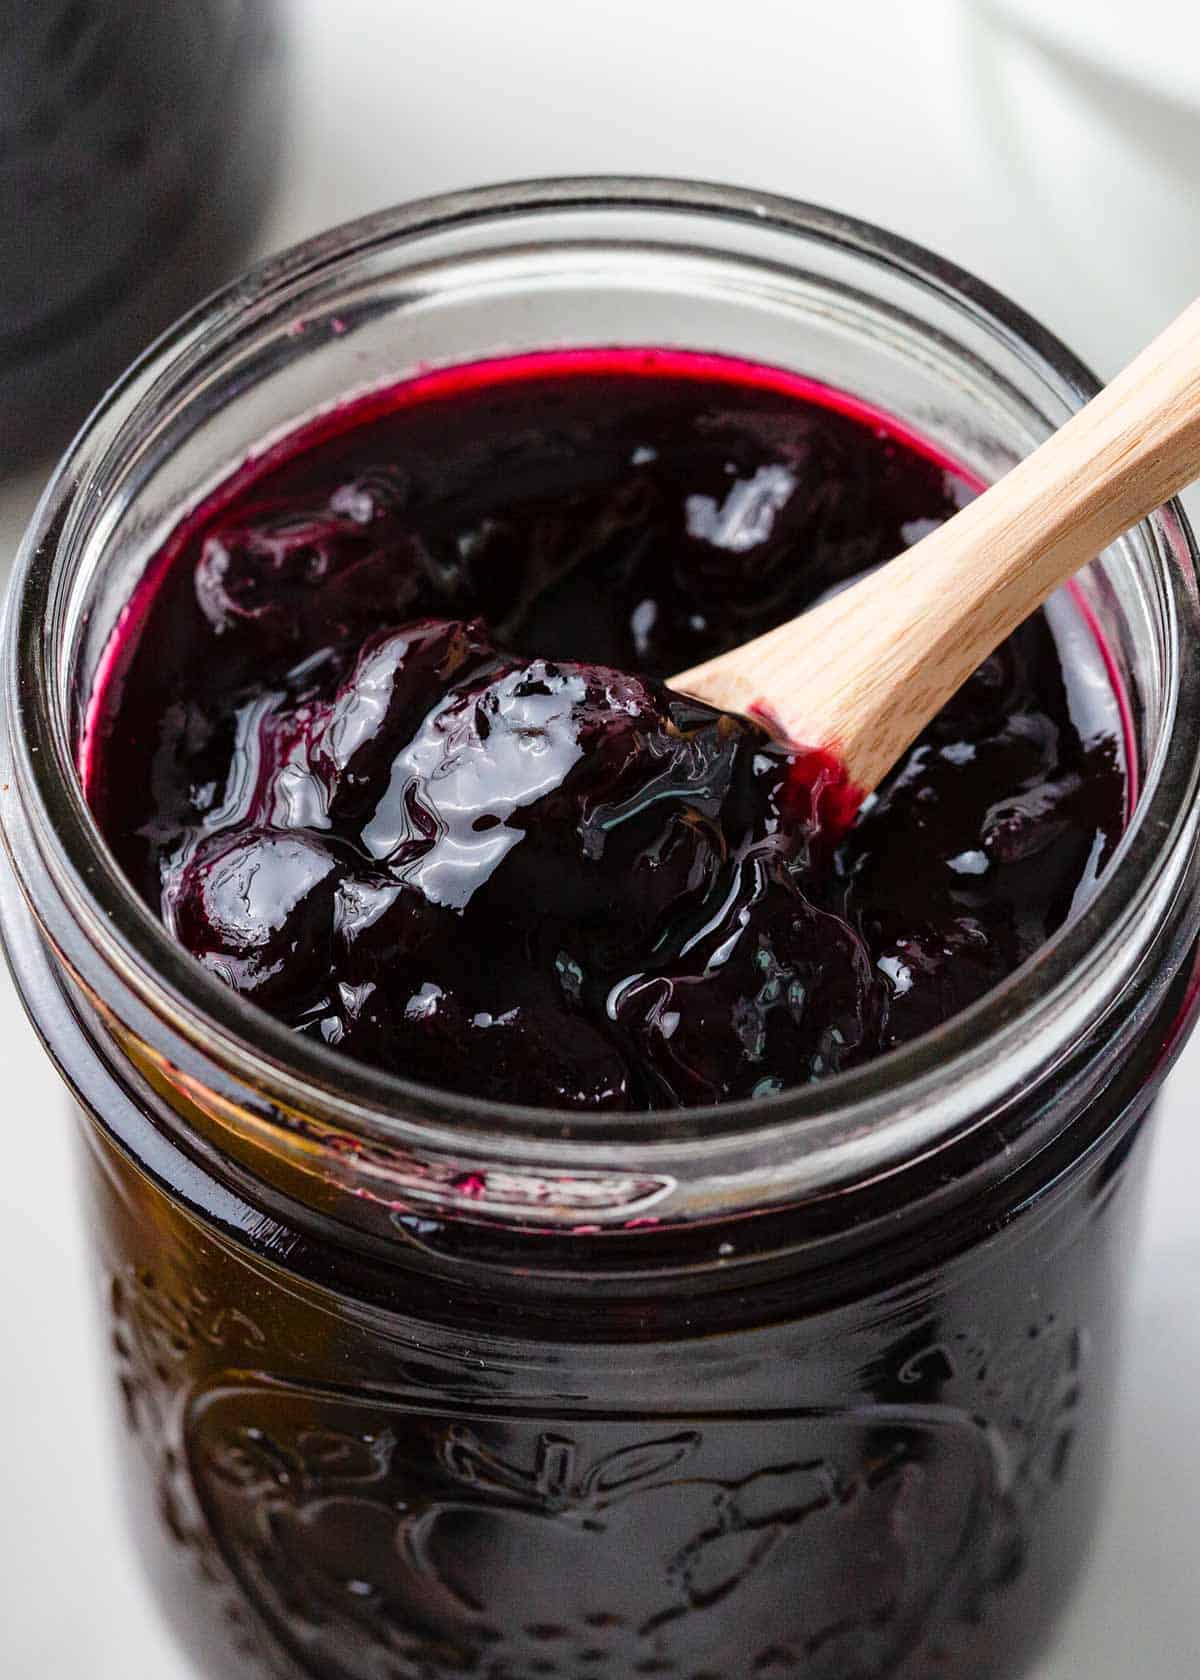 A closeup photo of blueberry jam in a glass jar.